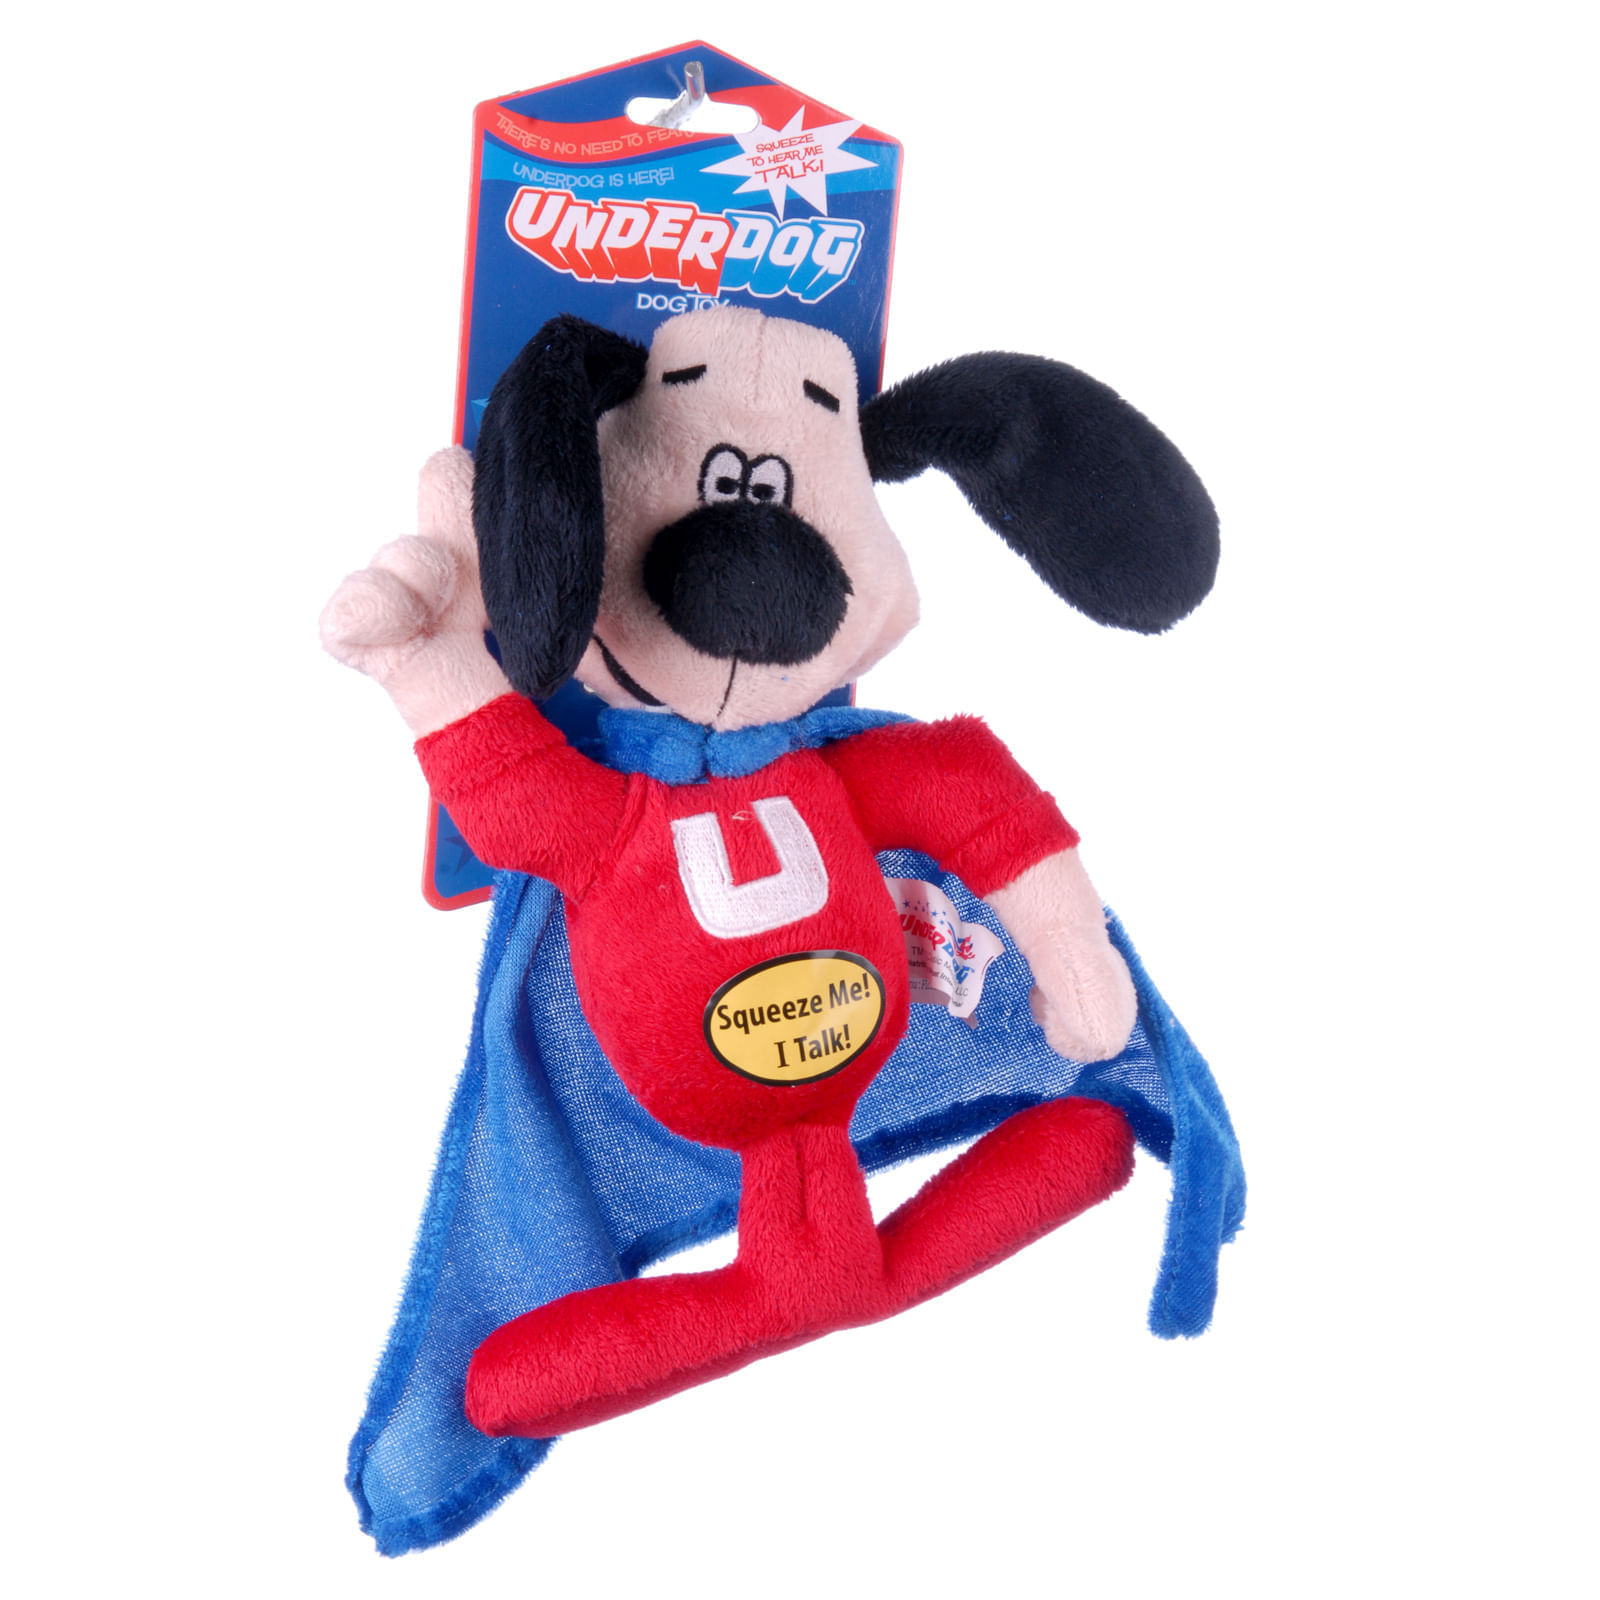 Underdog for Dog Toy - plush cartoon character fun dog toys